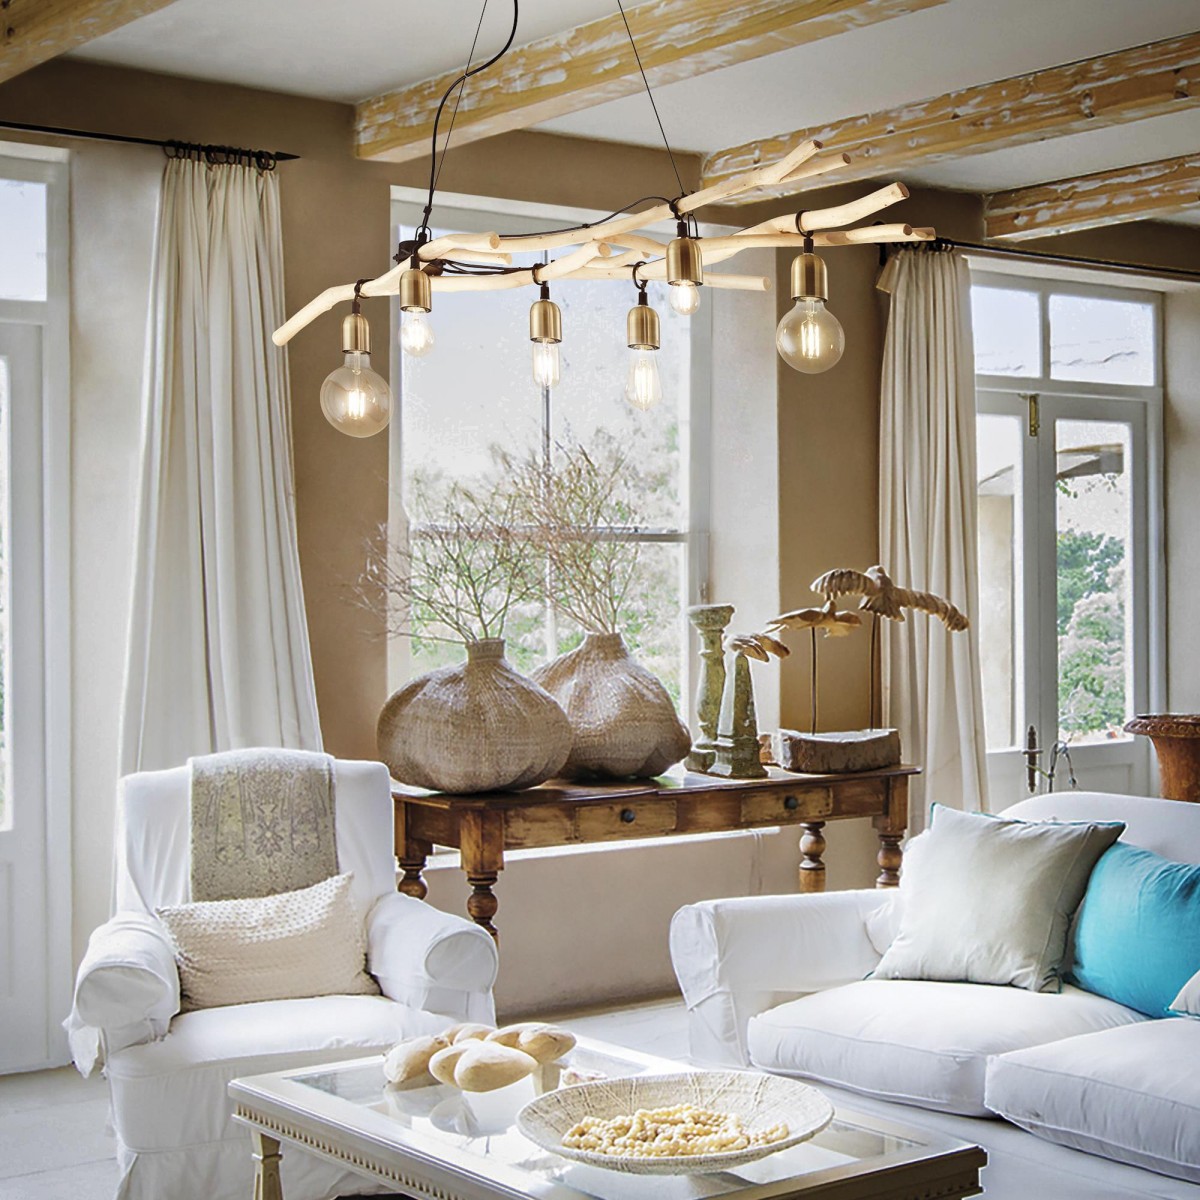 Závěsný lustr Ideal Lux v dekoru dřeva se zavěšenými žárovkami